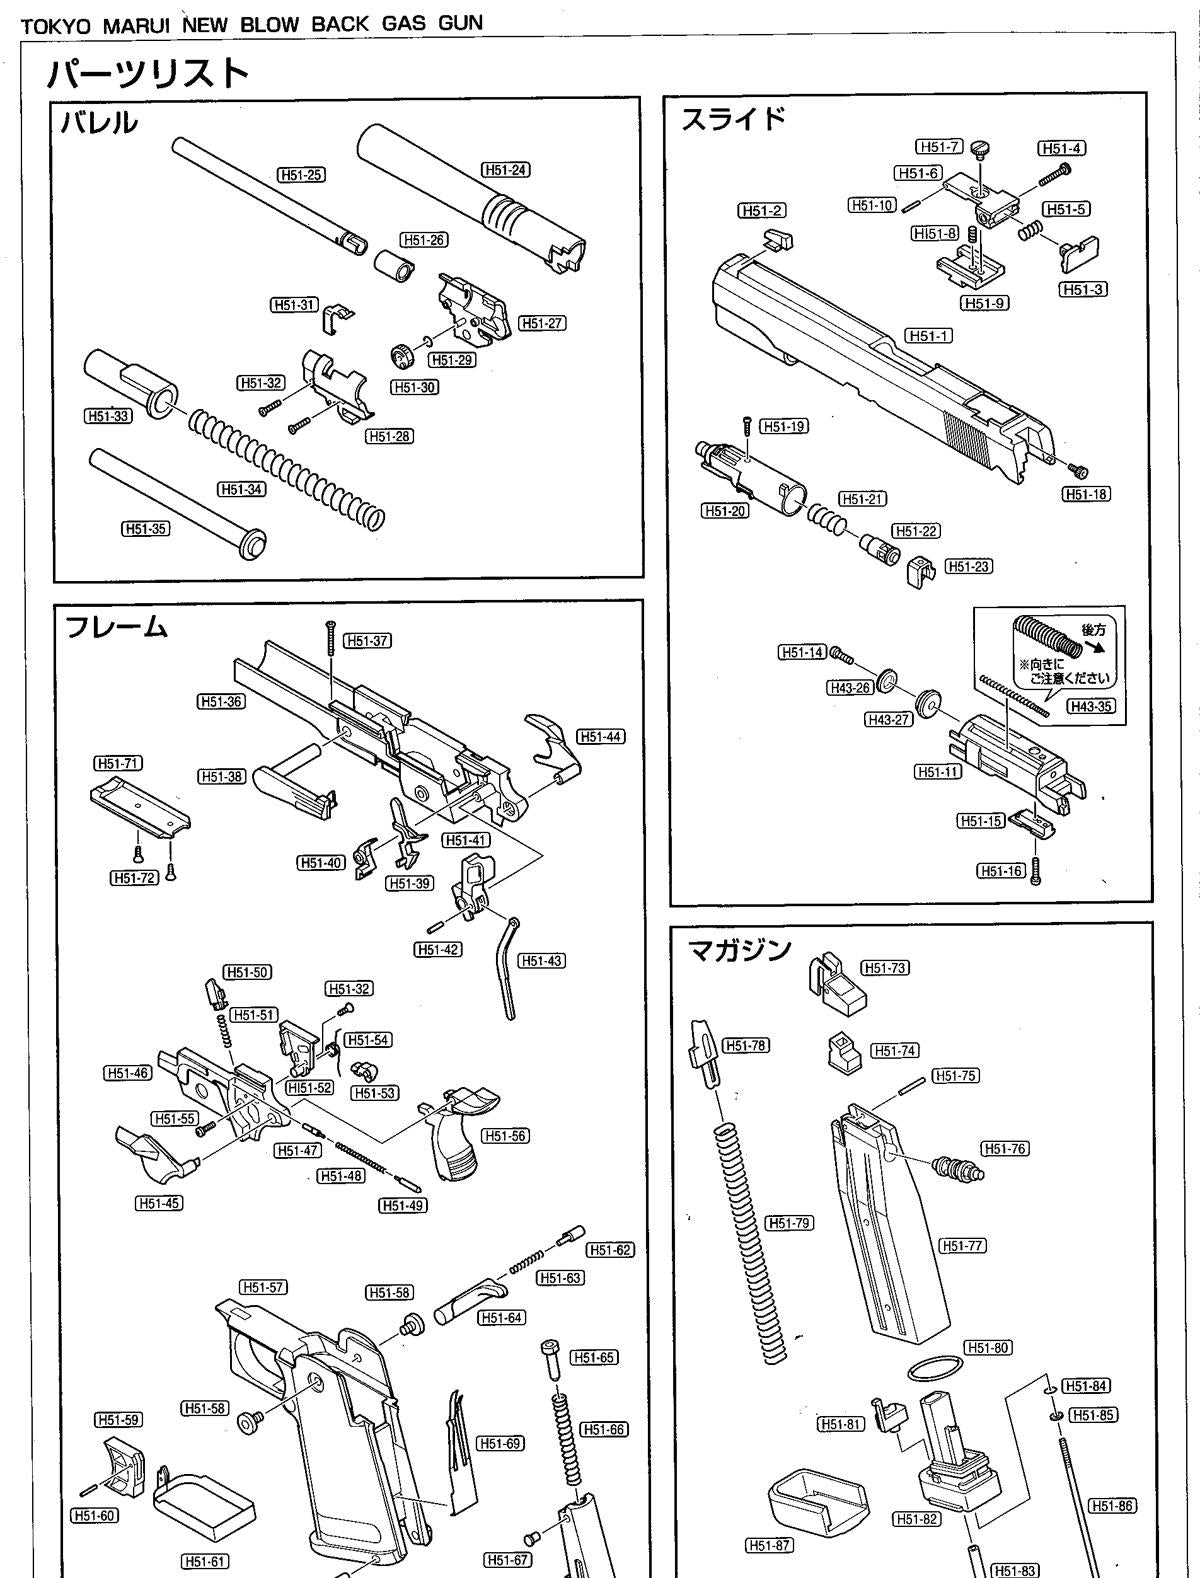 Tokyo Marui Hi-Capa - Part H51-35 - Recoil Spring Guide - Ebog Designs